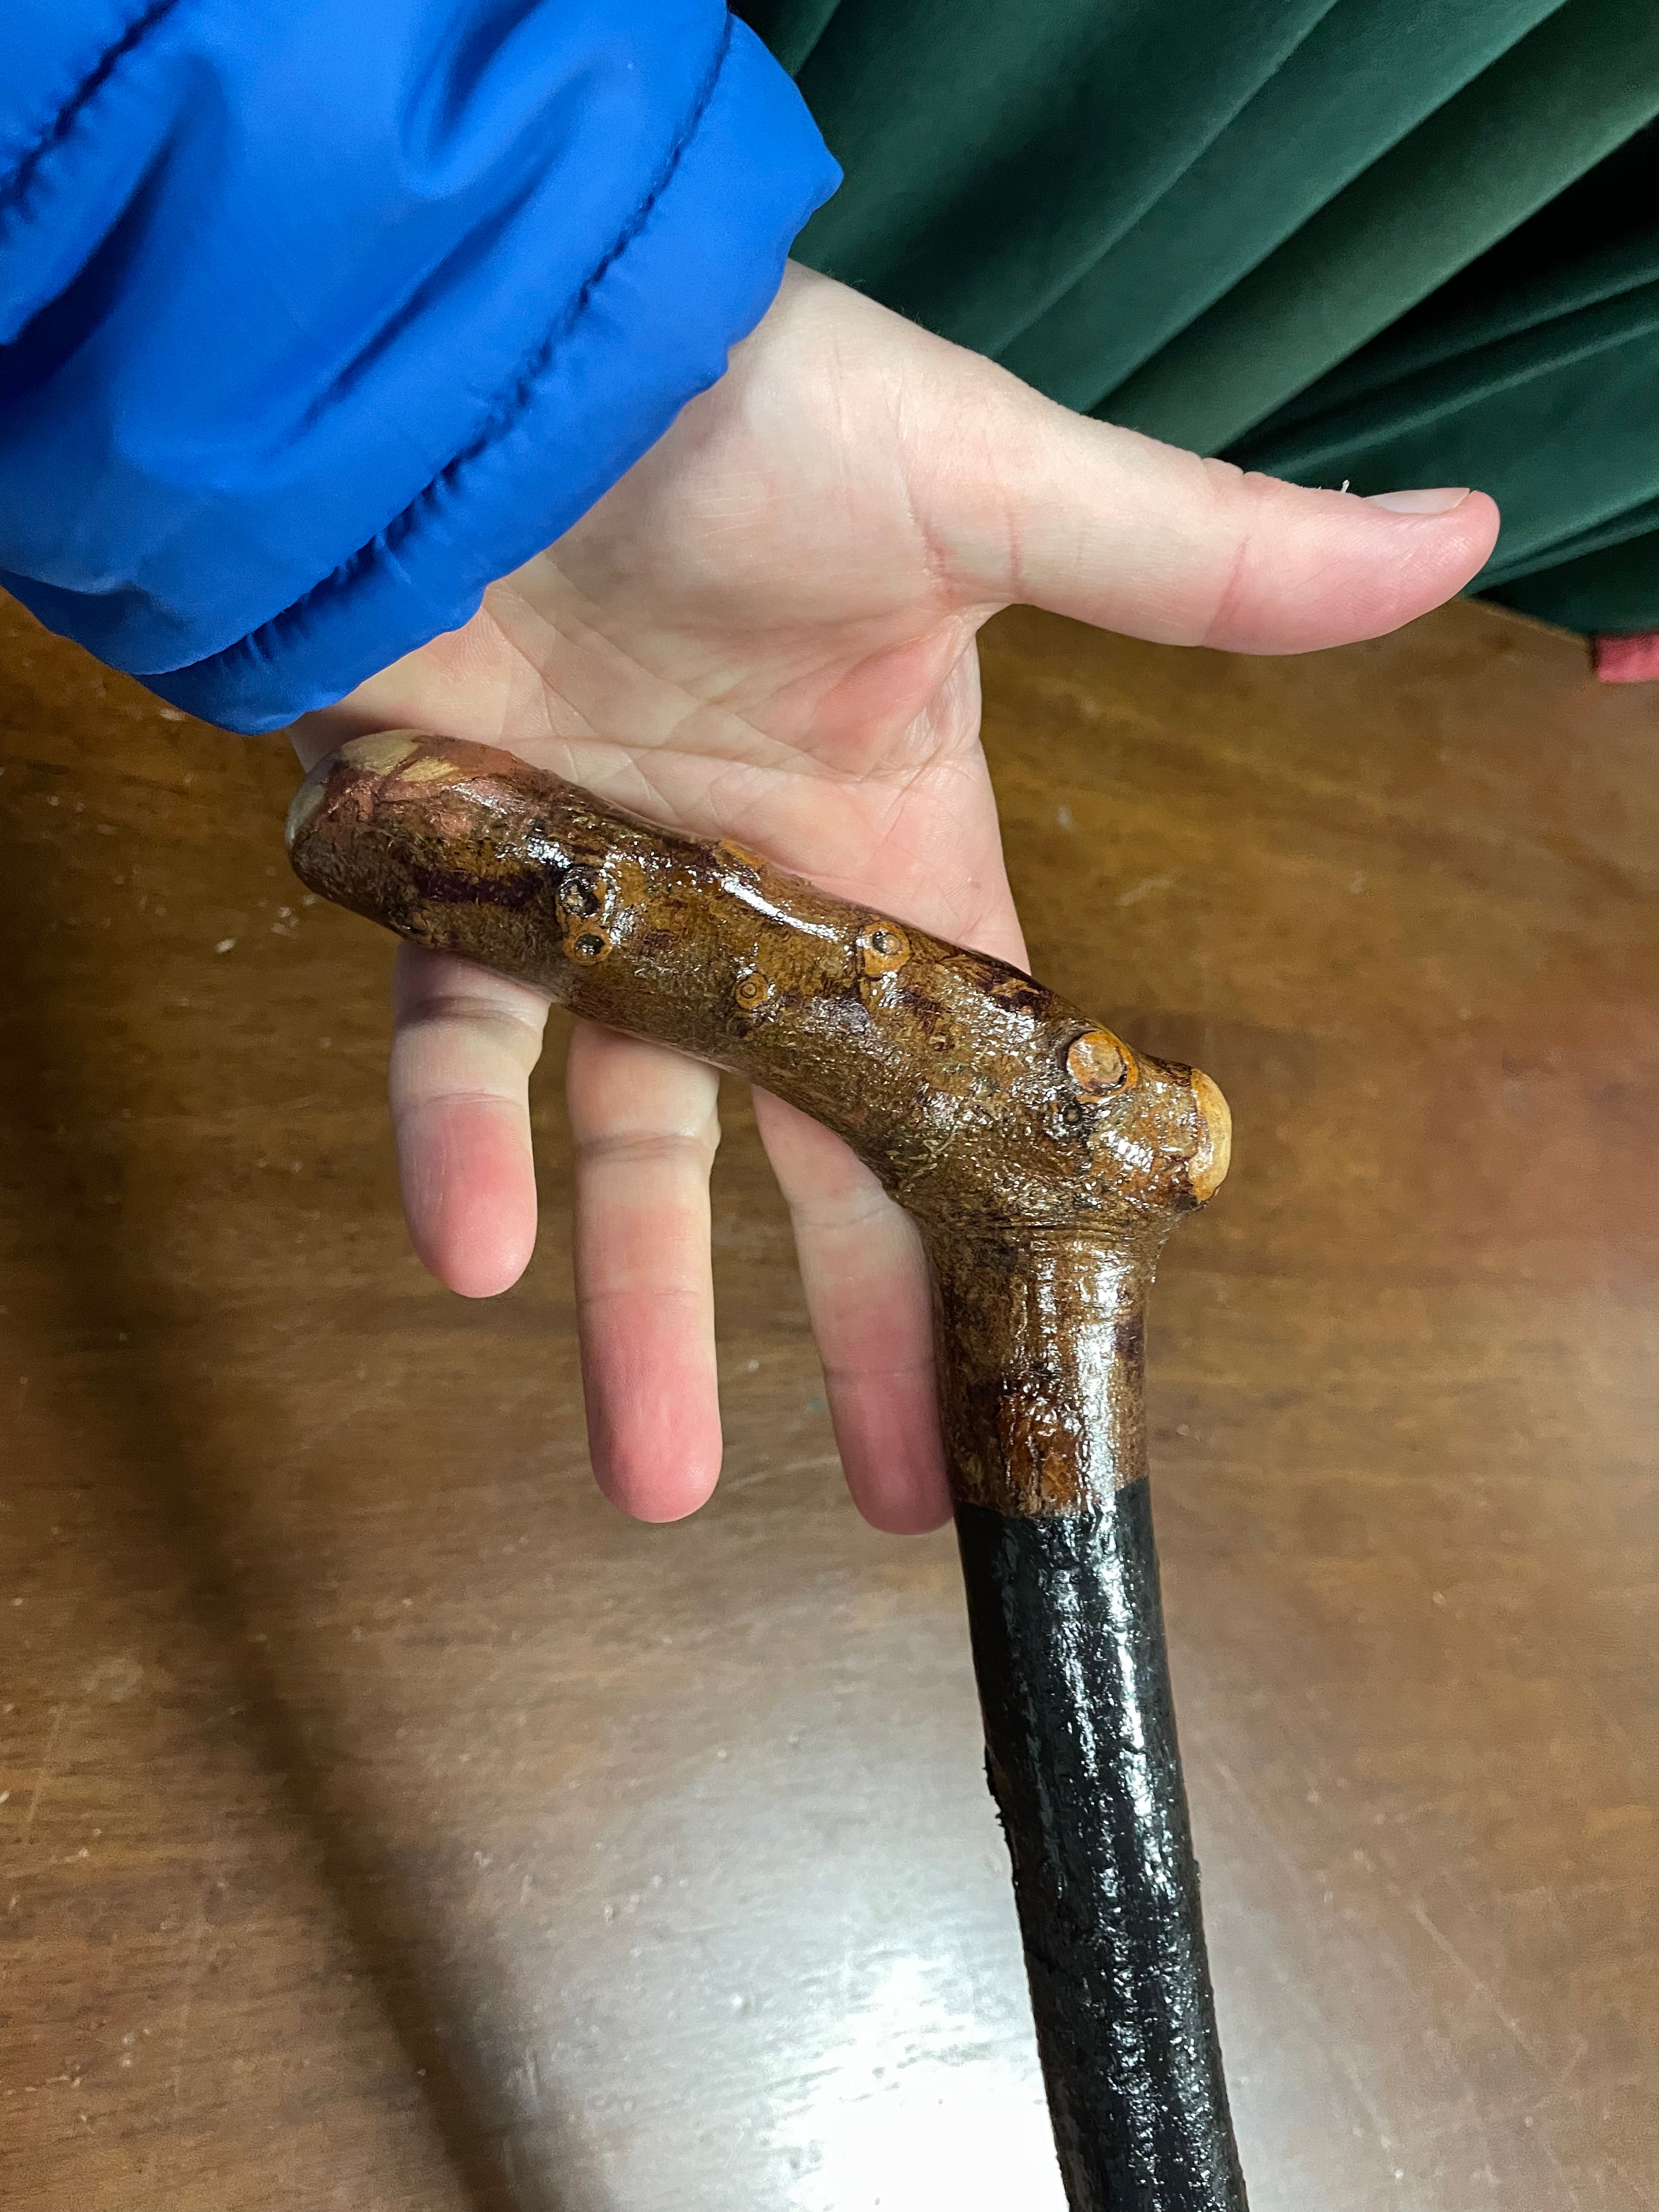 Blackthorn Walking Stick 38 1/2 inch- Handmade in Ireland